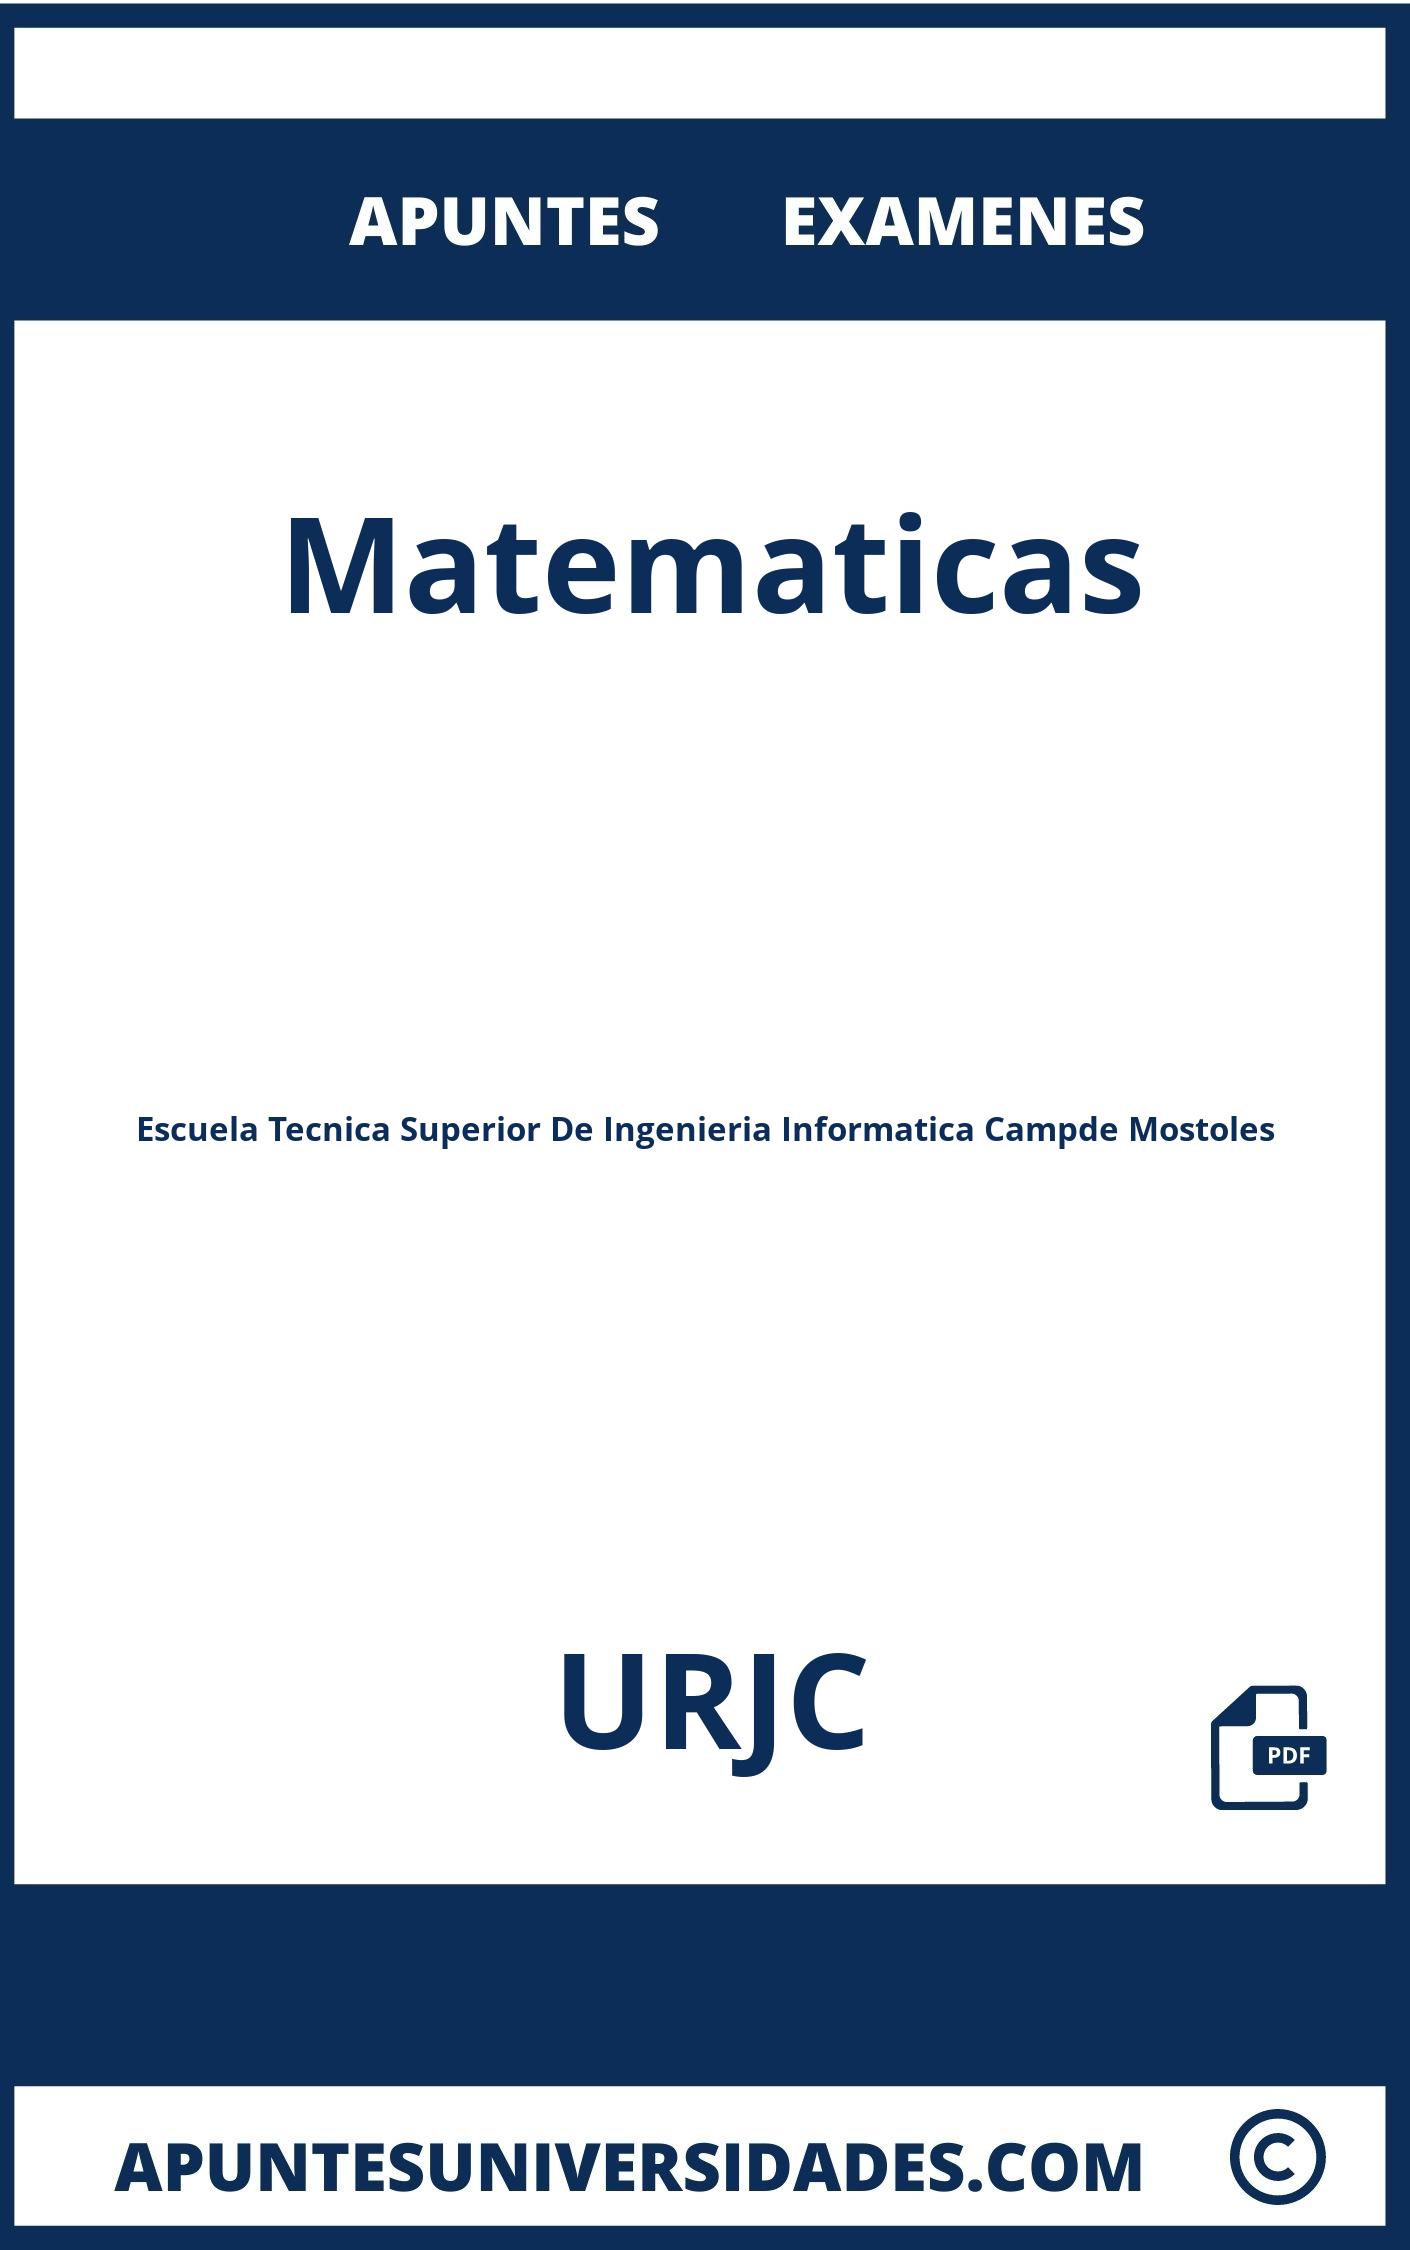 Apuntes Examenes Matematicas URJC